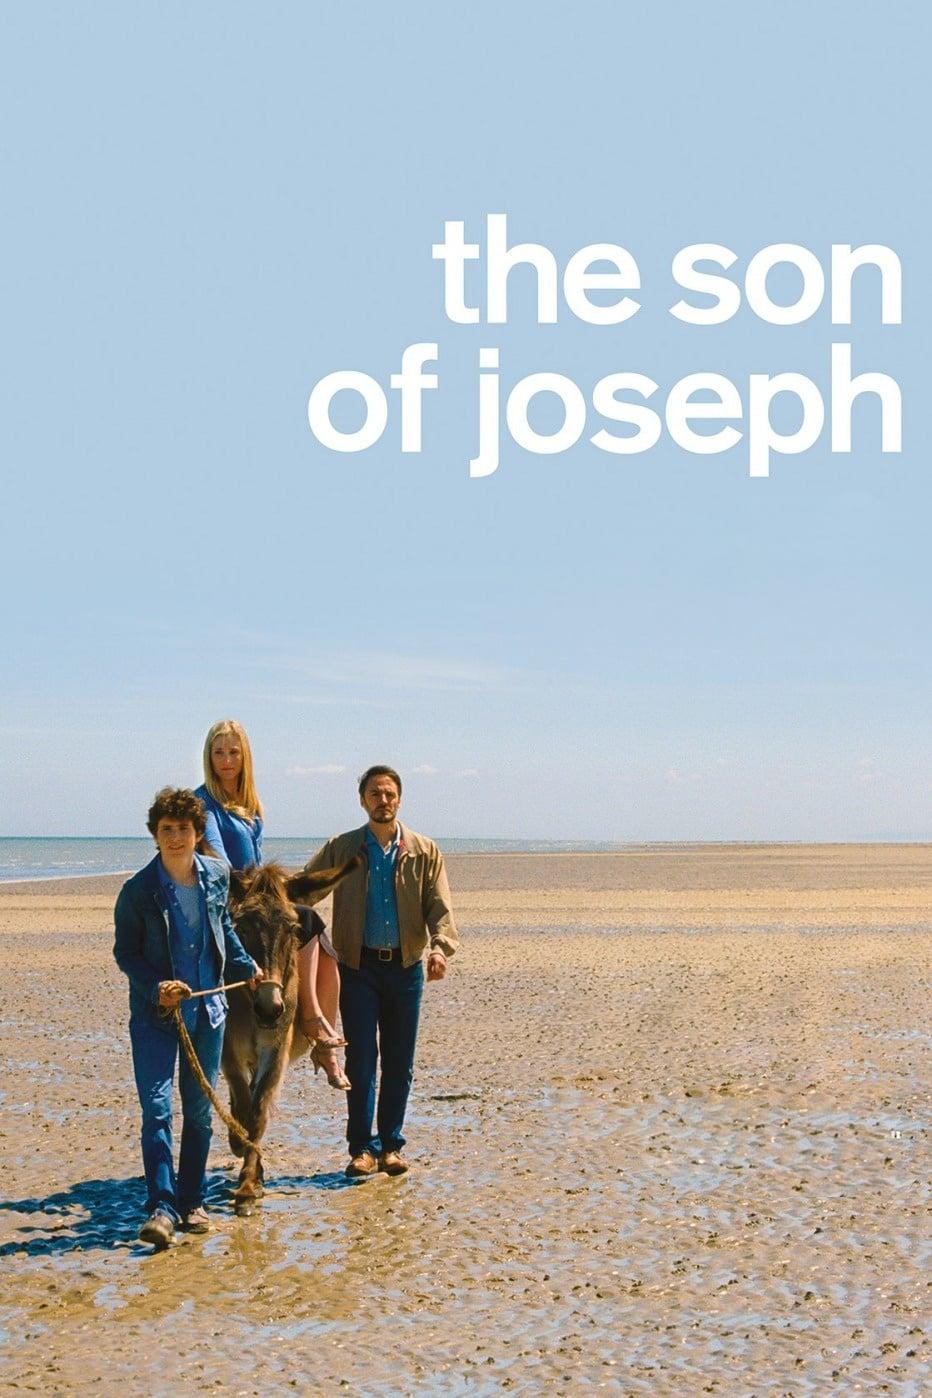 The Son of Joseph poster